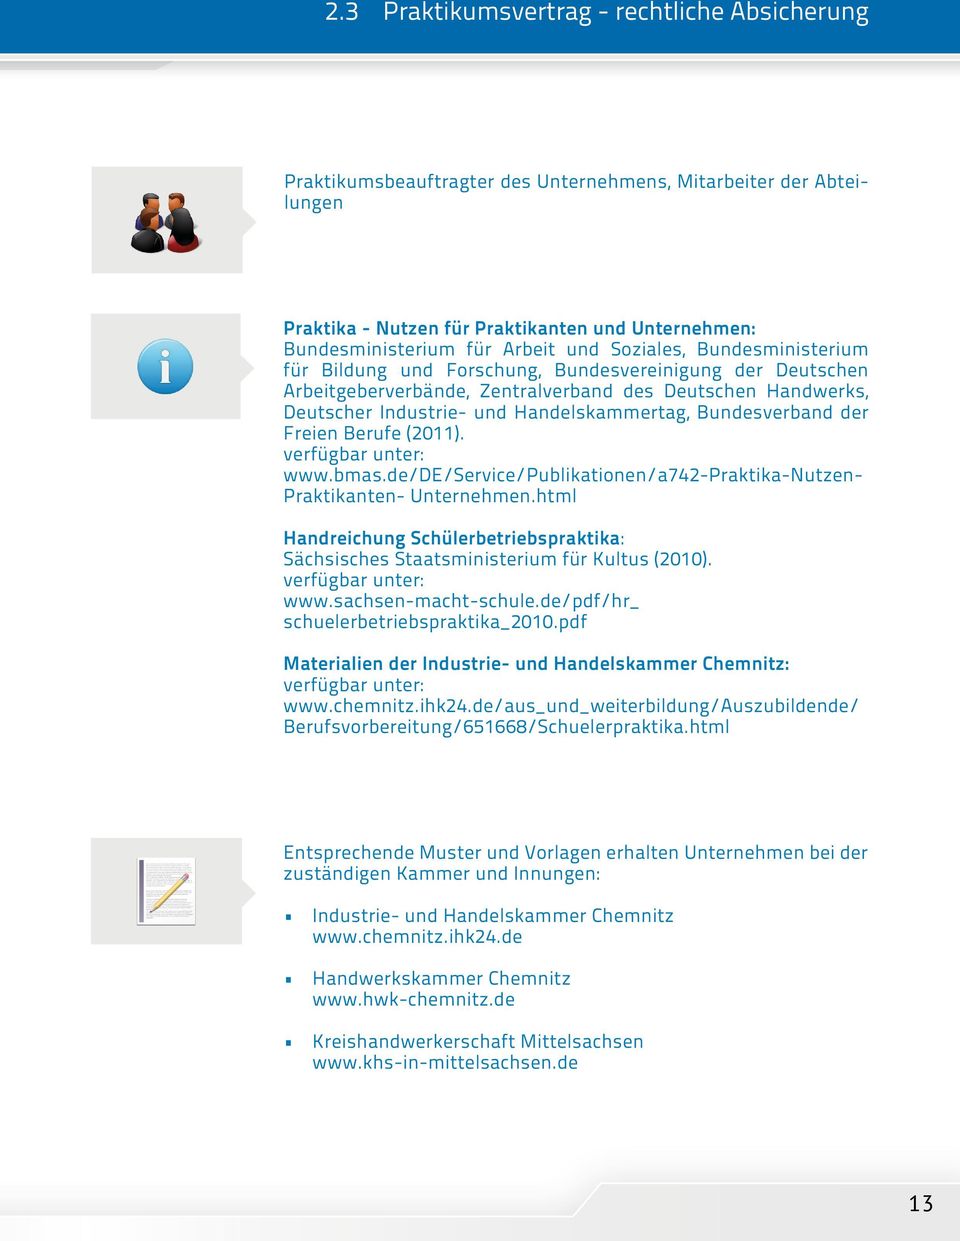 Bundesverband der Freien Berufe (2011). www.bmas.de/de/service/publikationen/a742-praktika-nutzen- Praktikanten- Unternehmen.